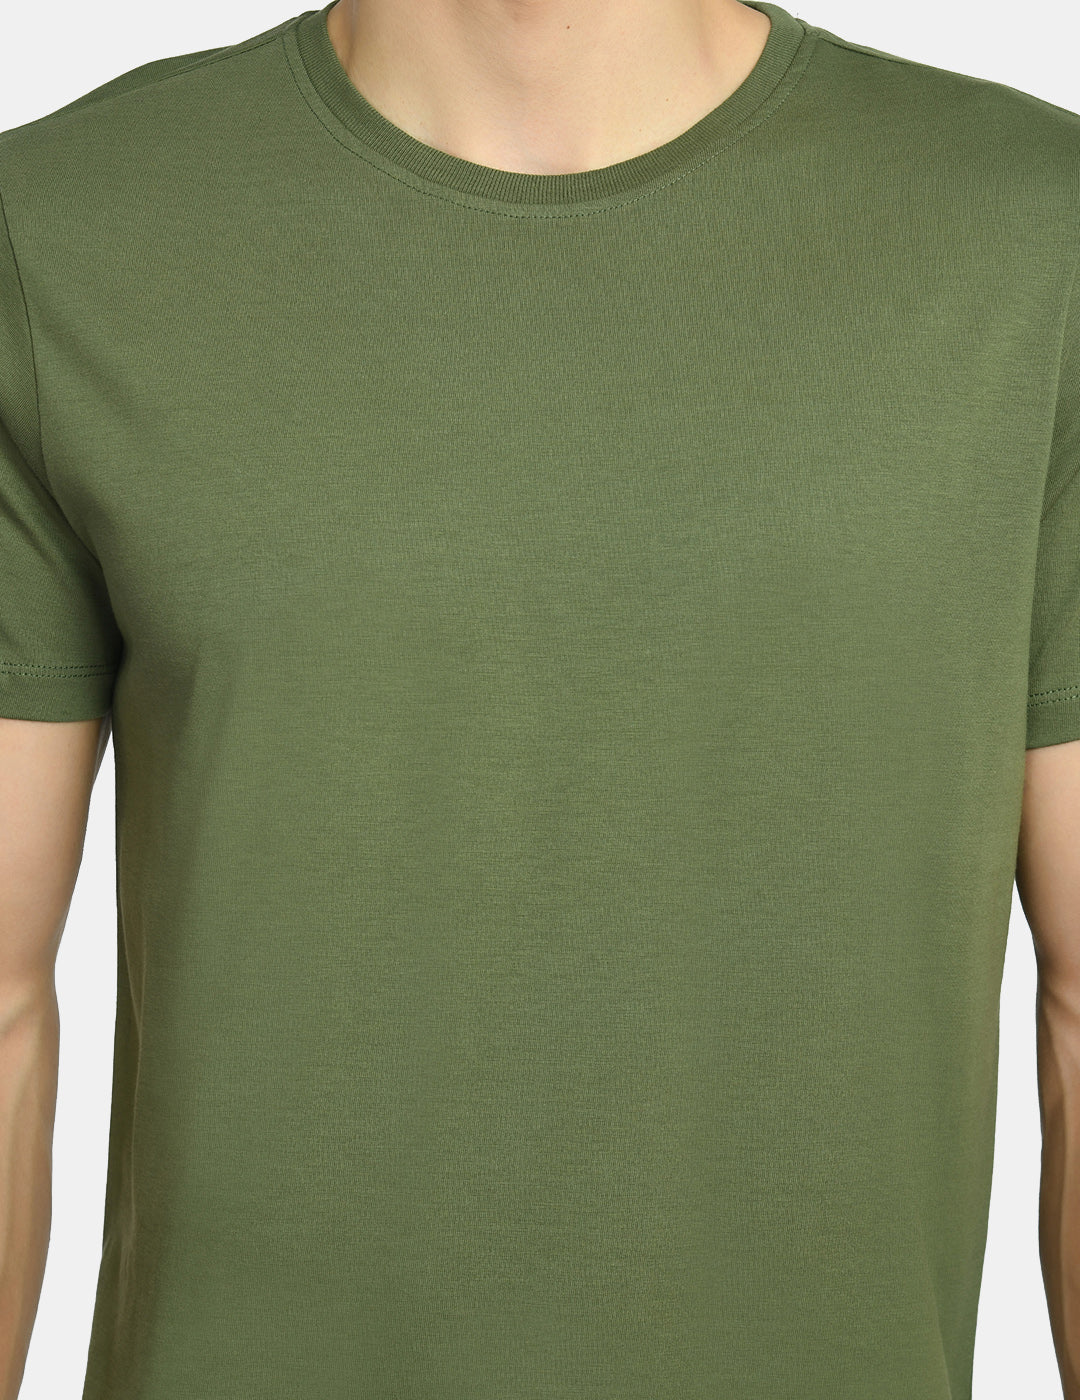 Men's Plain Pickle Green Round Neck T-Shirt